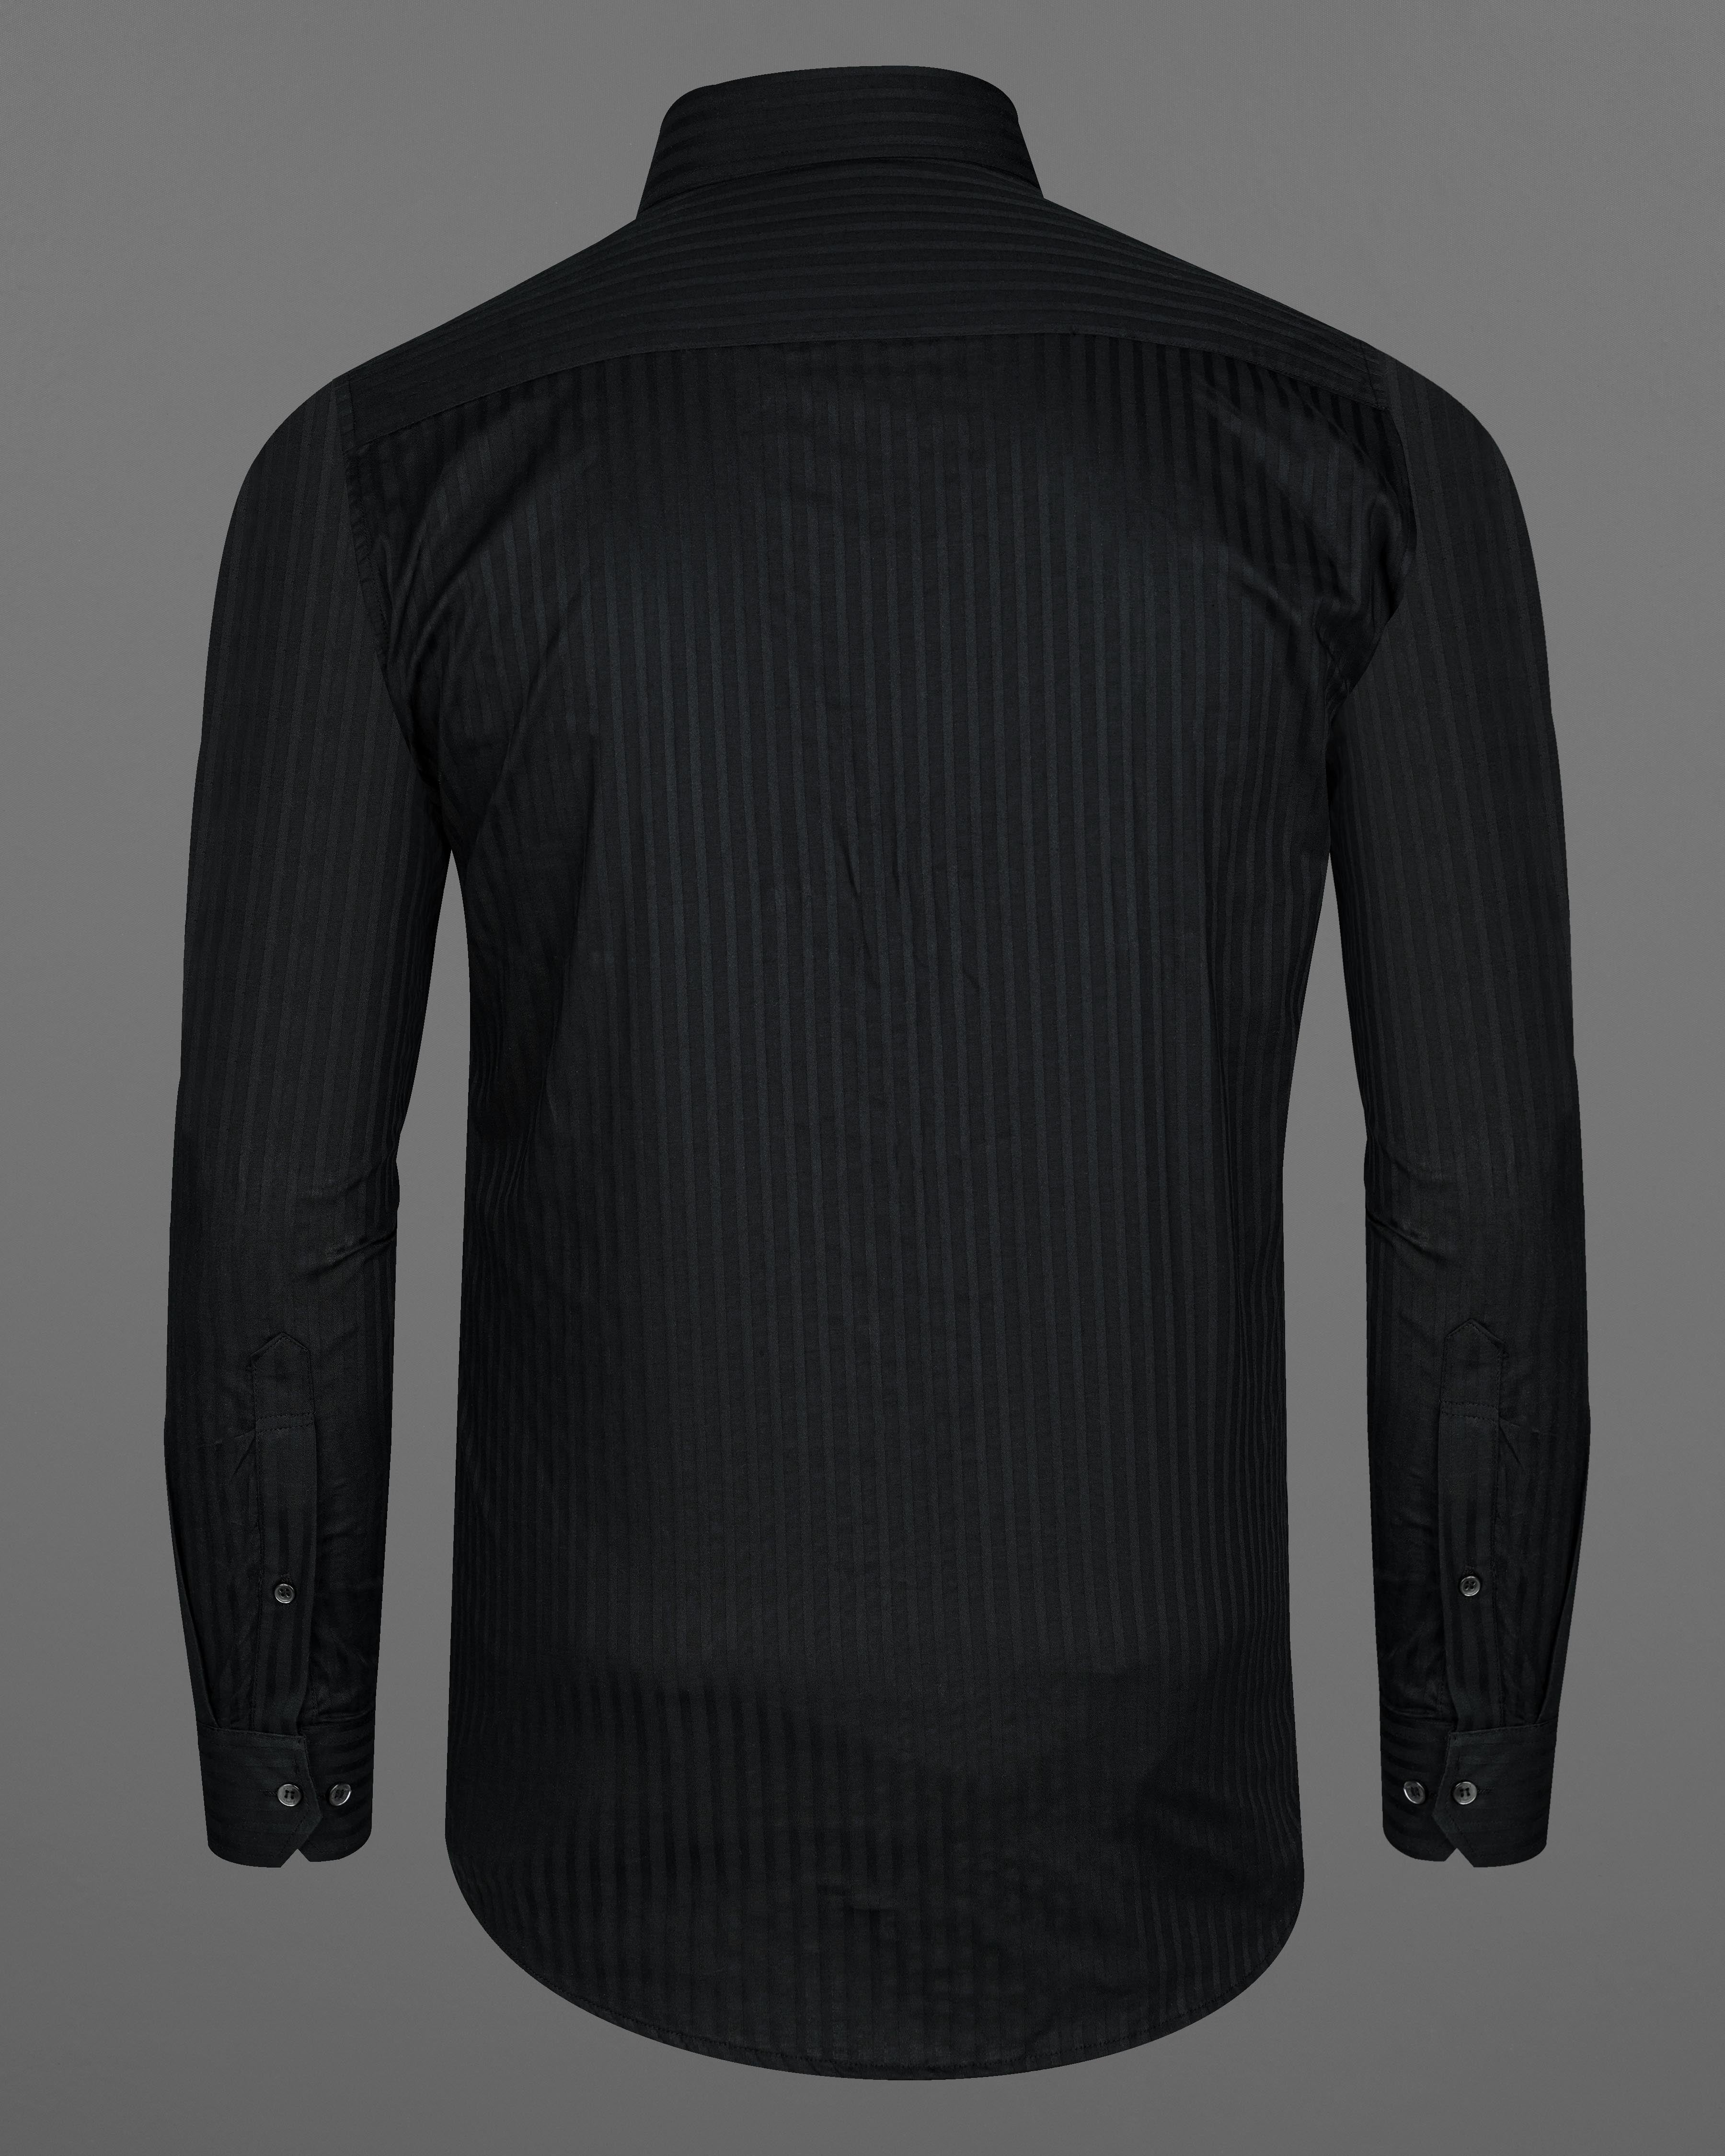 Jade Black Striped Dobby Textured Premium Giza Cotton Shirt 8456-CA-BLK-38,8456-CA-BLK-H-38,8456-CA-BLK-9,8456-CA-BLK-9,8456-CA-BLK-40,8456-CA-BLK-H-40,8456-CA-BLK-2,8456-CA-BLK-2,8456-CA-BLK-4,8456-CA-BLK-4,8456-CA-BLK-6,8456-CA-BLK-6,8456-CA-BLK-8,8456-CA-BLK-8,8456-CA-BLK-50,8456-CA-BLK-H-50,8456-CA-BLK-2,8456-CA-BLK-2